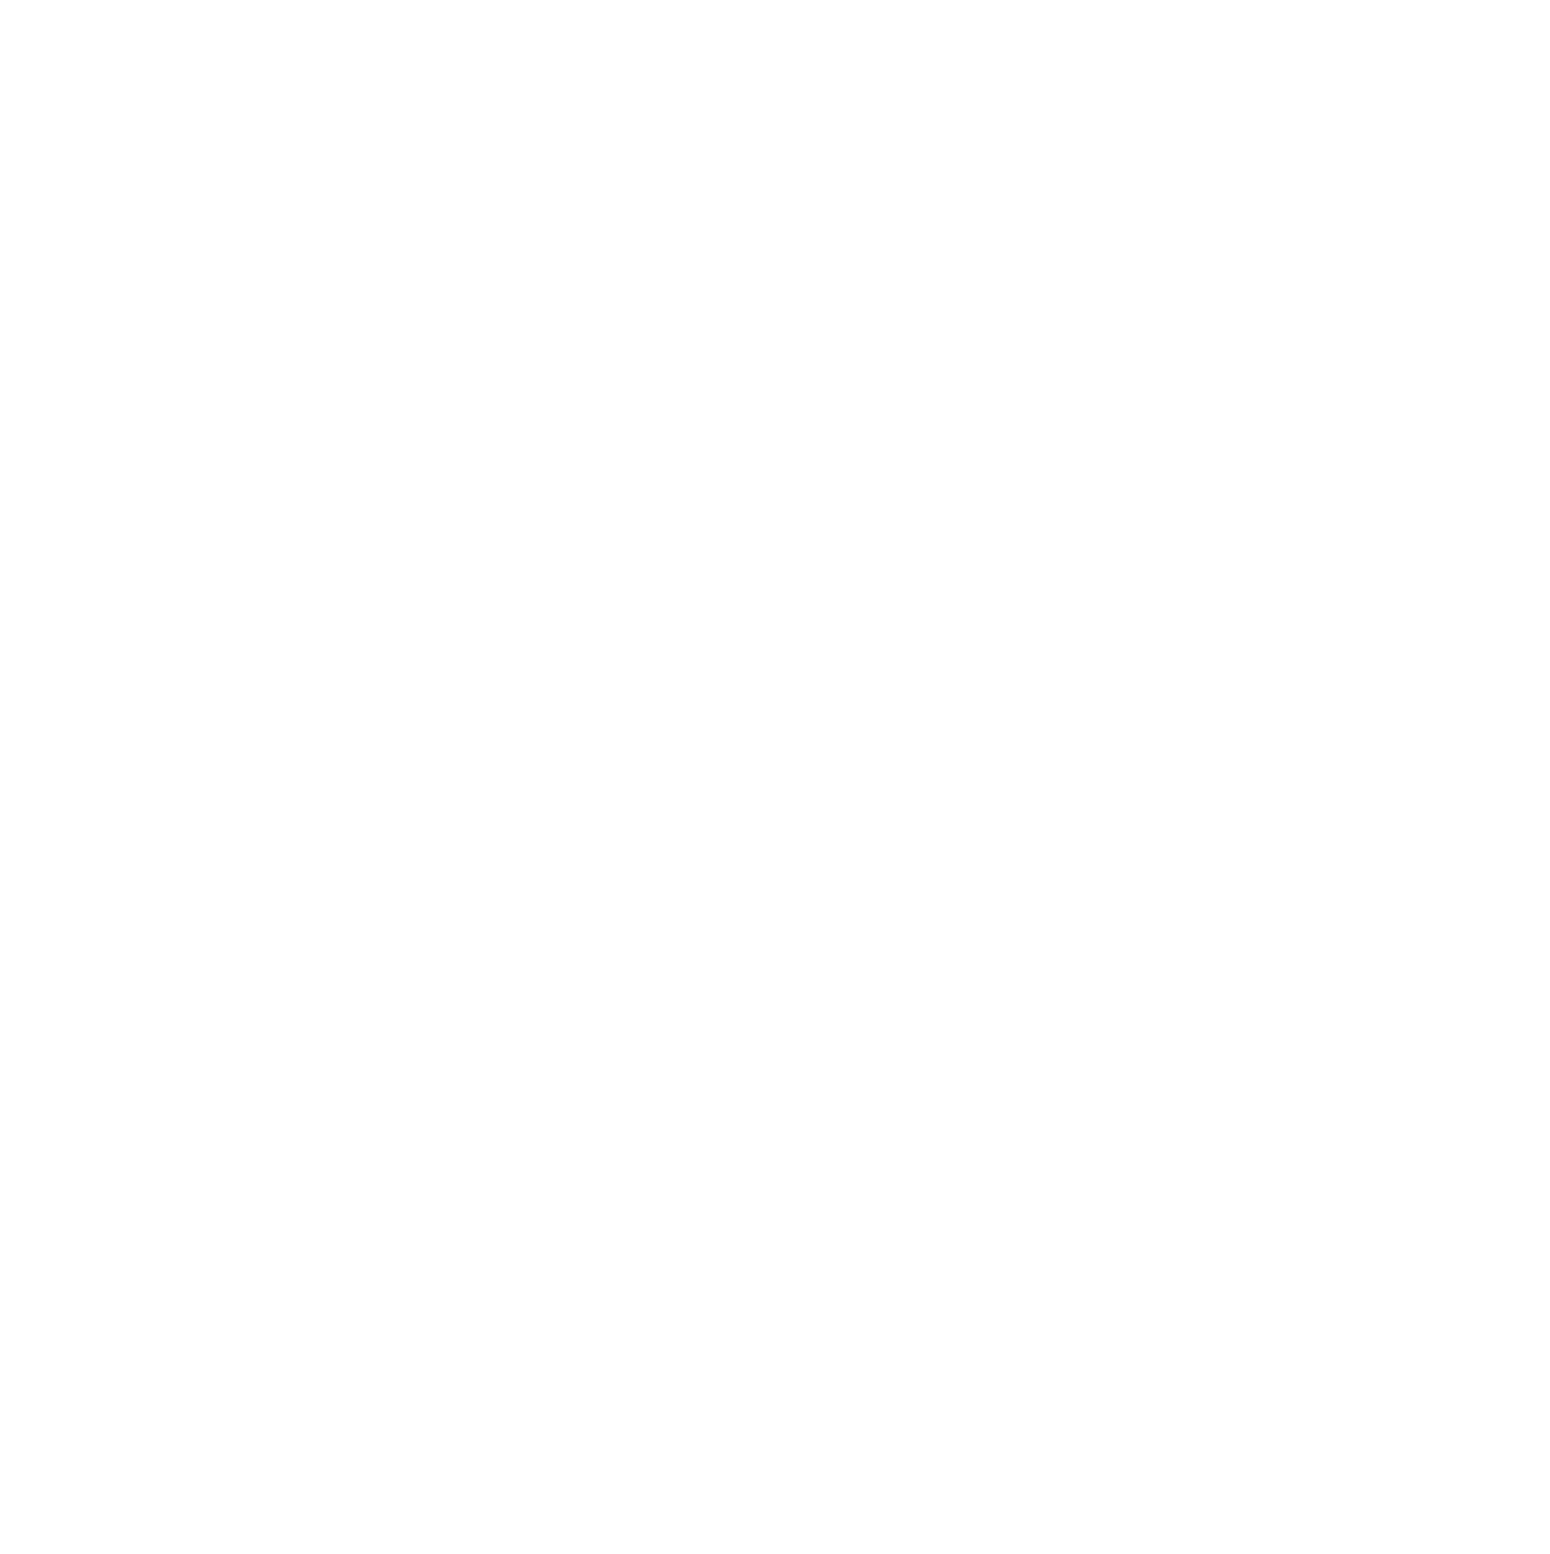 Munters Group AB logo for dark backgrounds (transparent PNG)